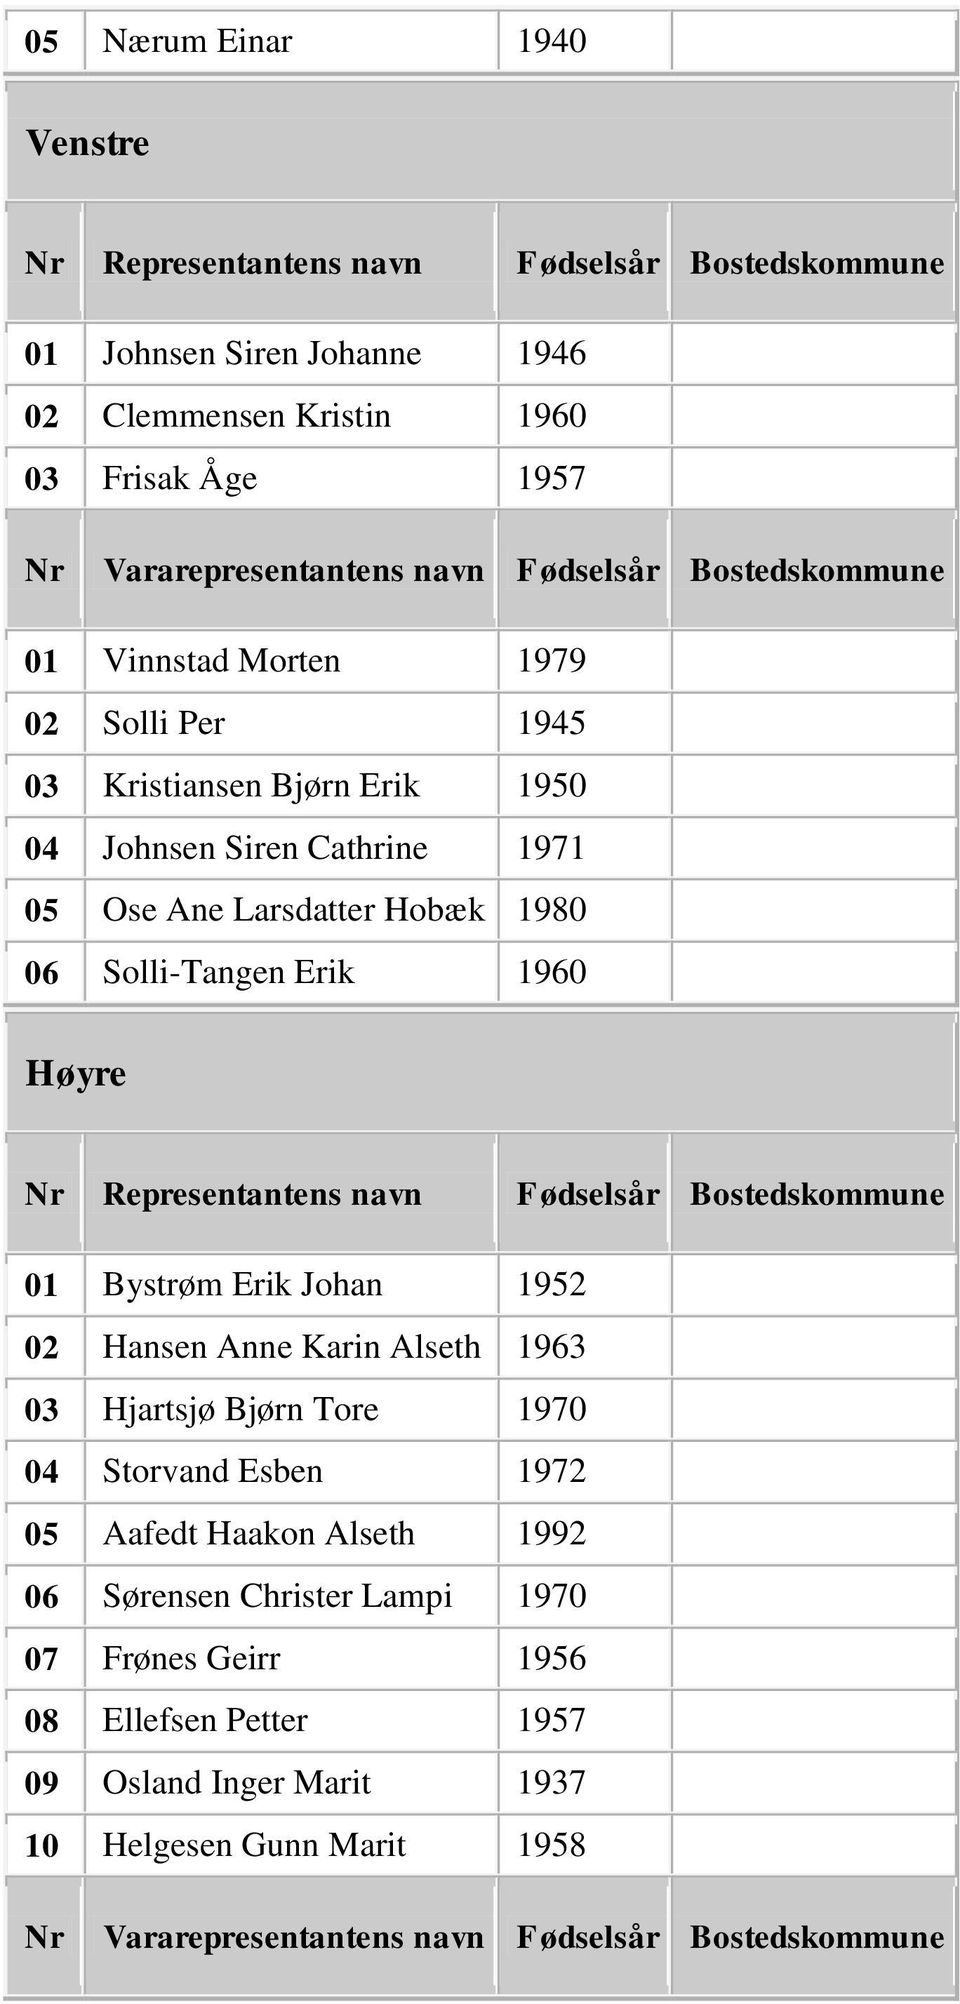 Høyre 01 Bystrøm Erik Johan 1952 02 Hansen Anne Karin Alseth 1963 03 Hjartsjø Bjørn Tore 1970 04 Storvand Esben 1972 05 Aafedt Haakon